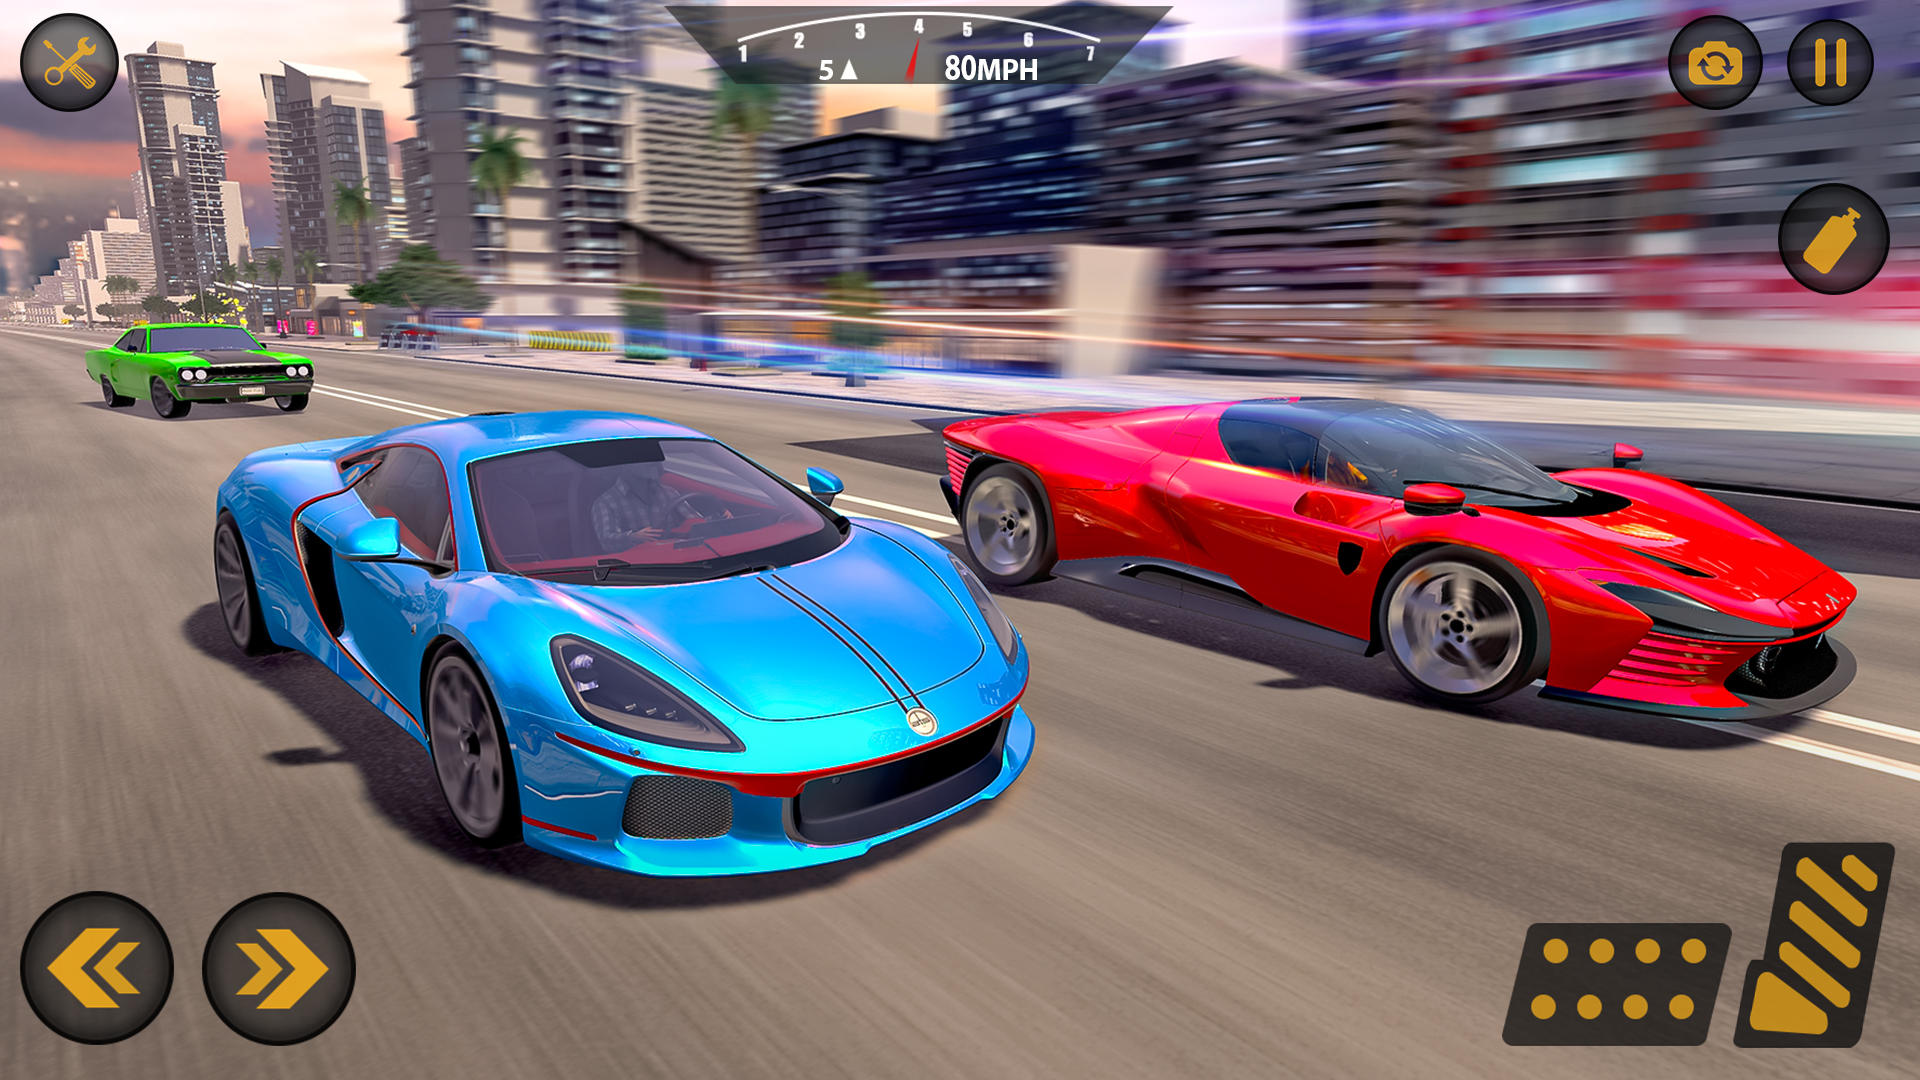 Screenshot 1 of giochi di guida in auto 5.0